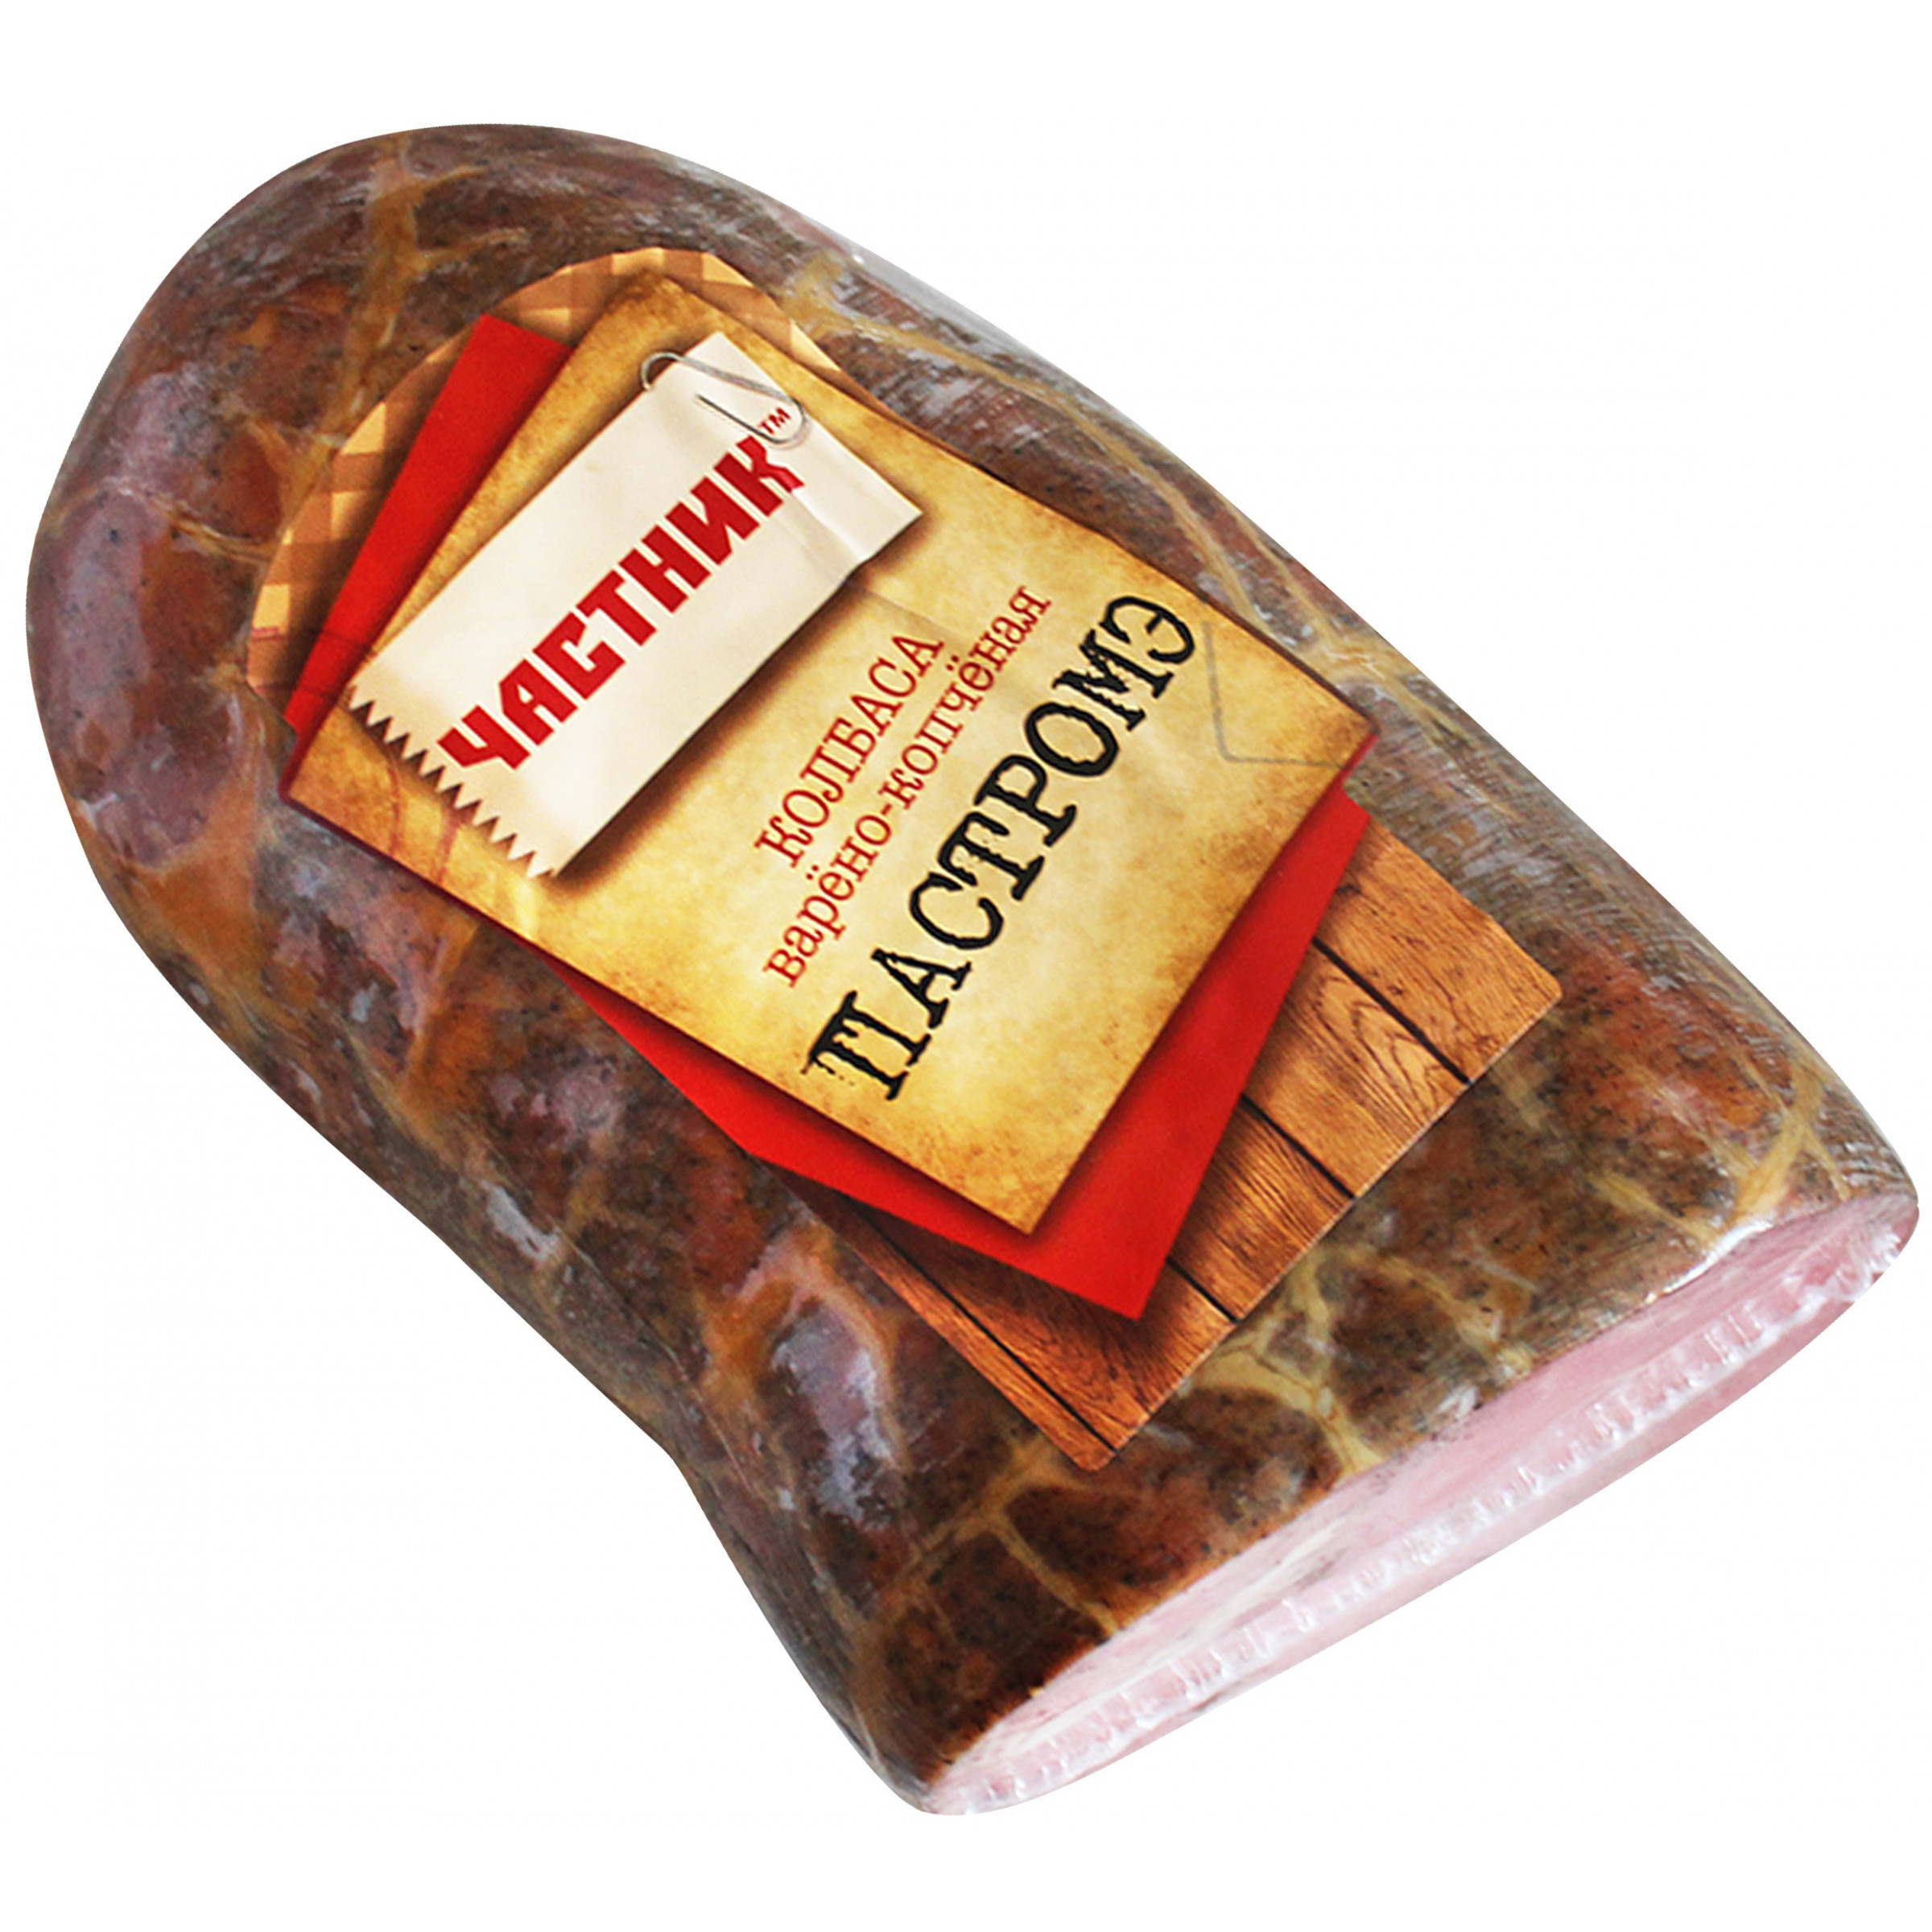 Варено-копченая колбаса Пастромэ Частник (средний вес: 1600 г)